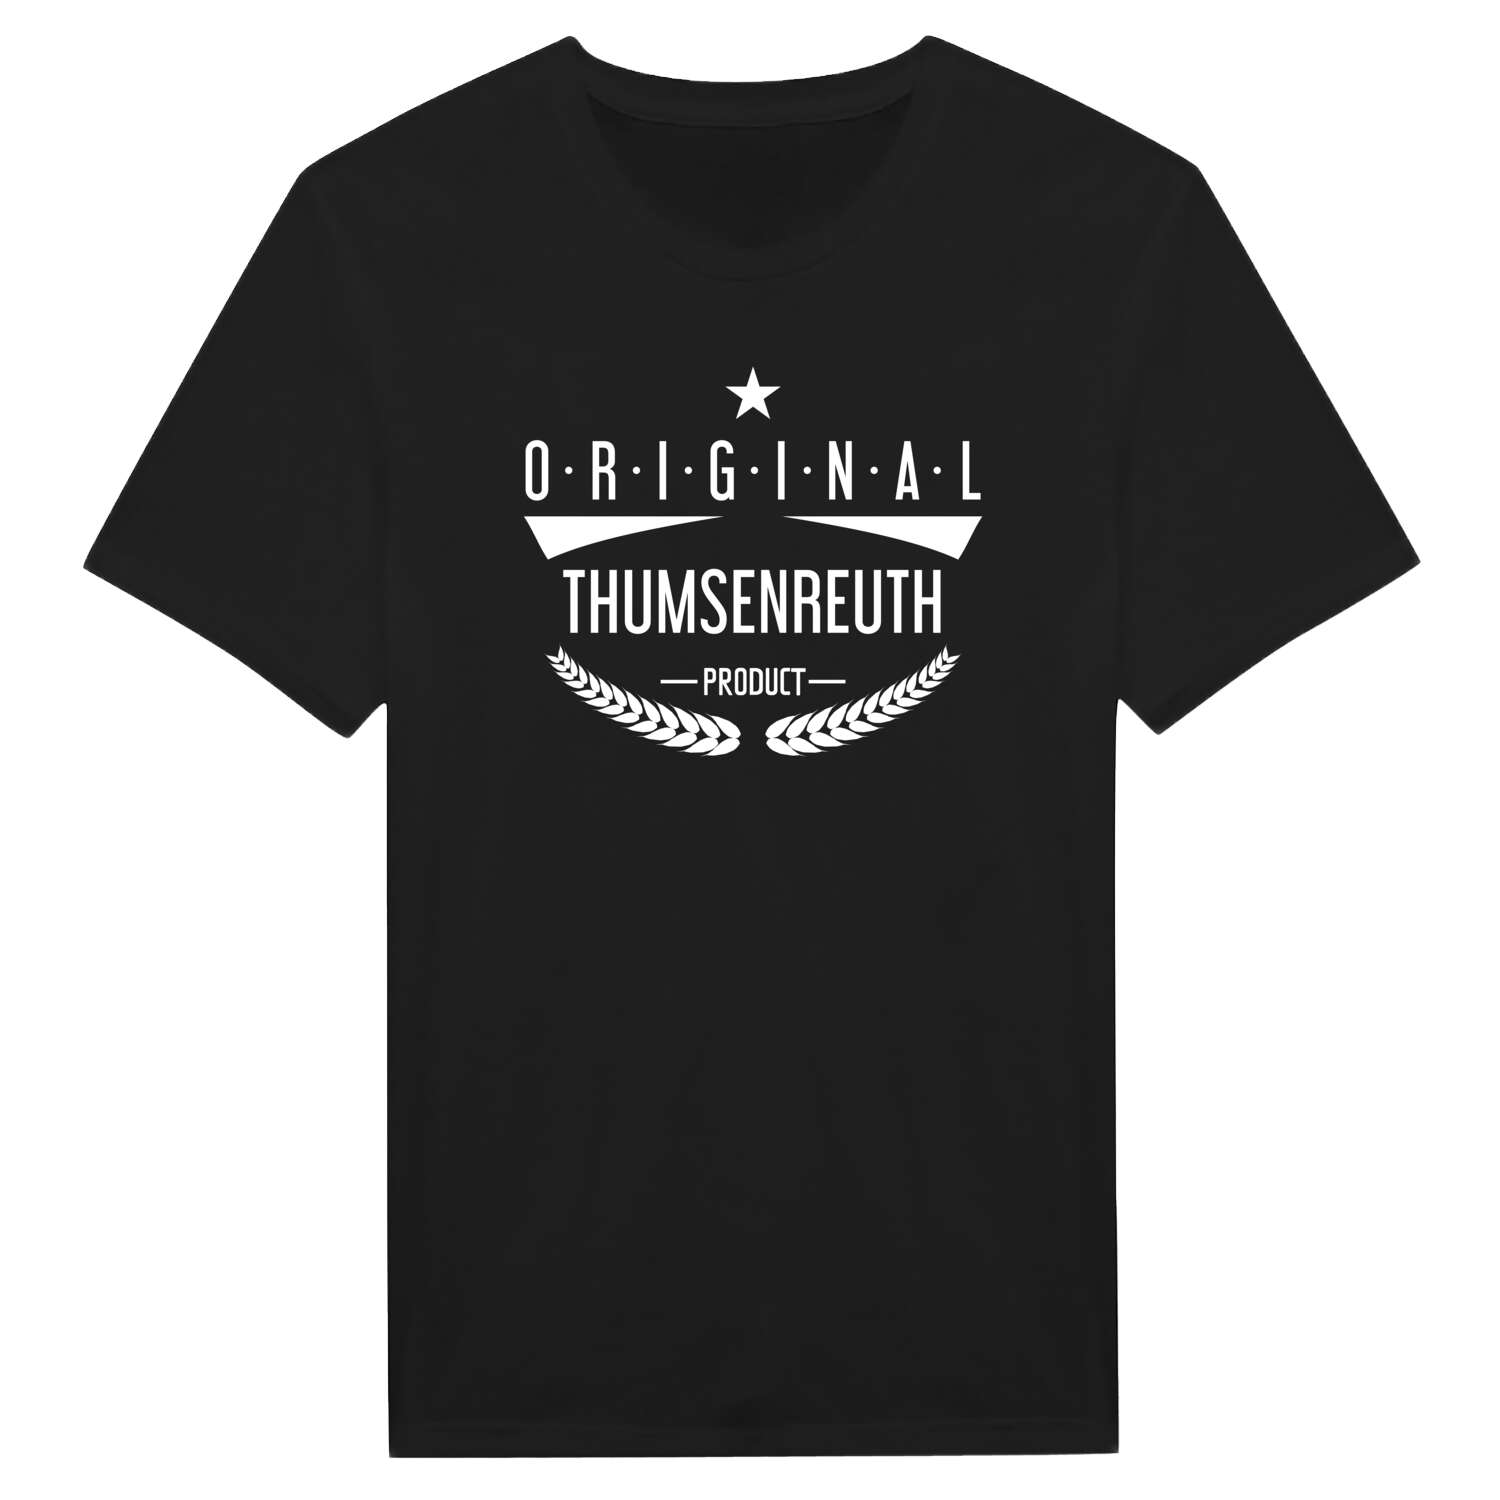 Thumsenreuth T-Shirt »Original Product«